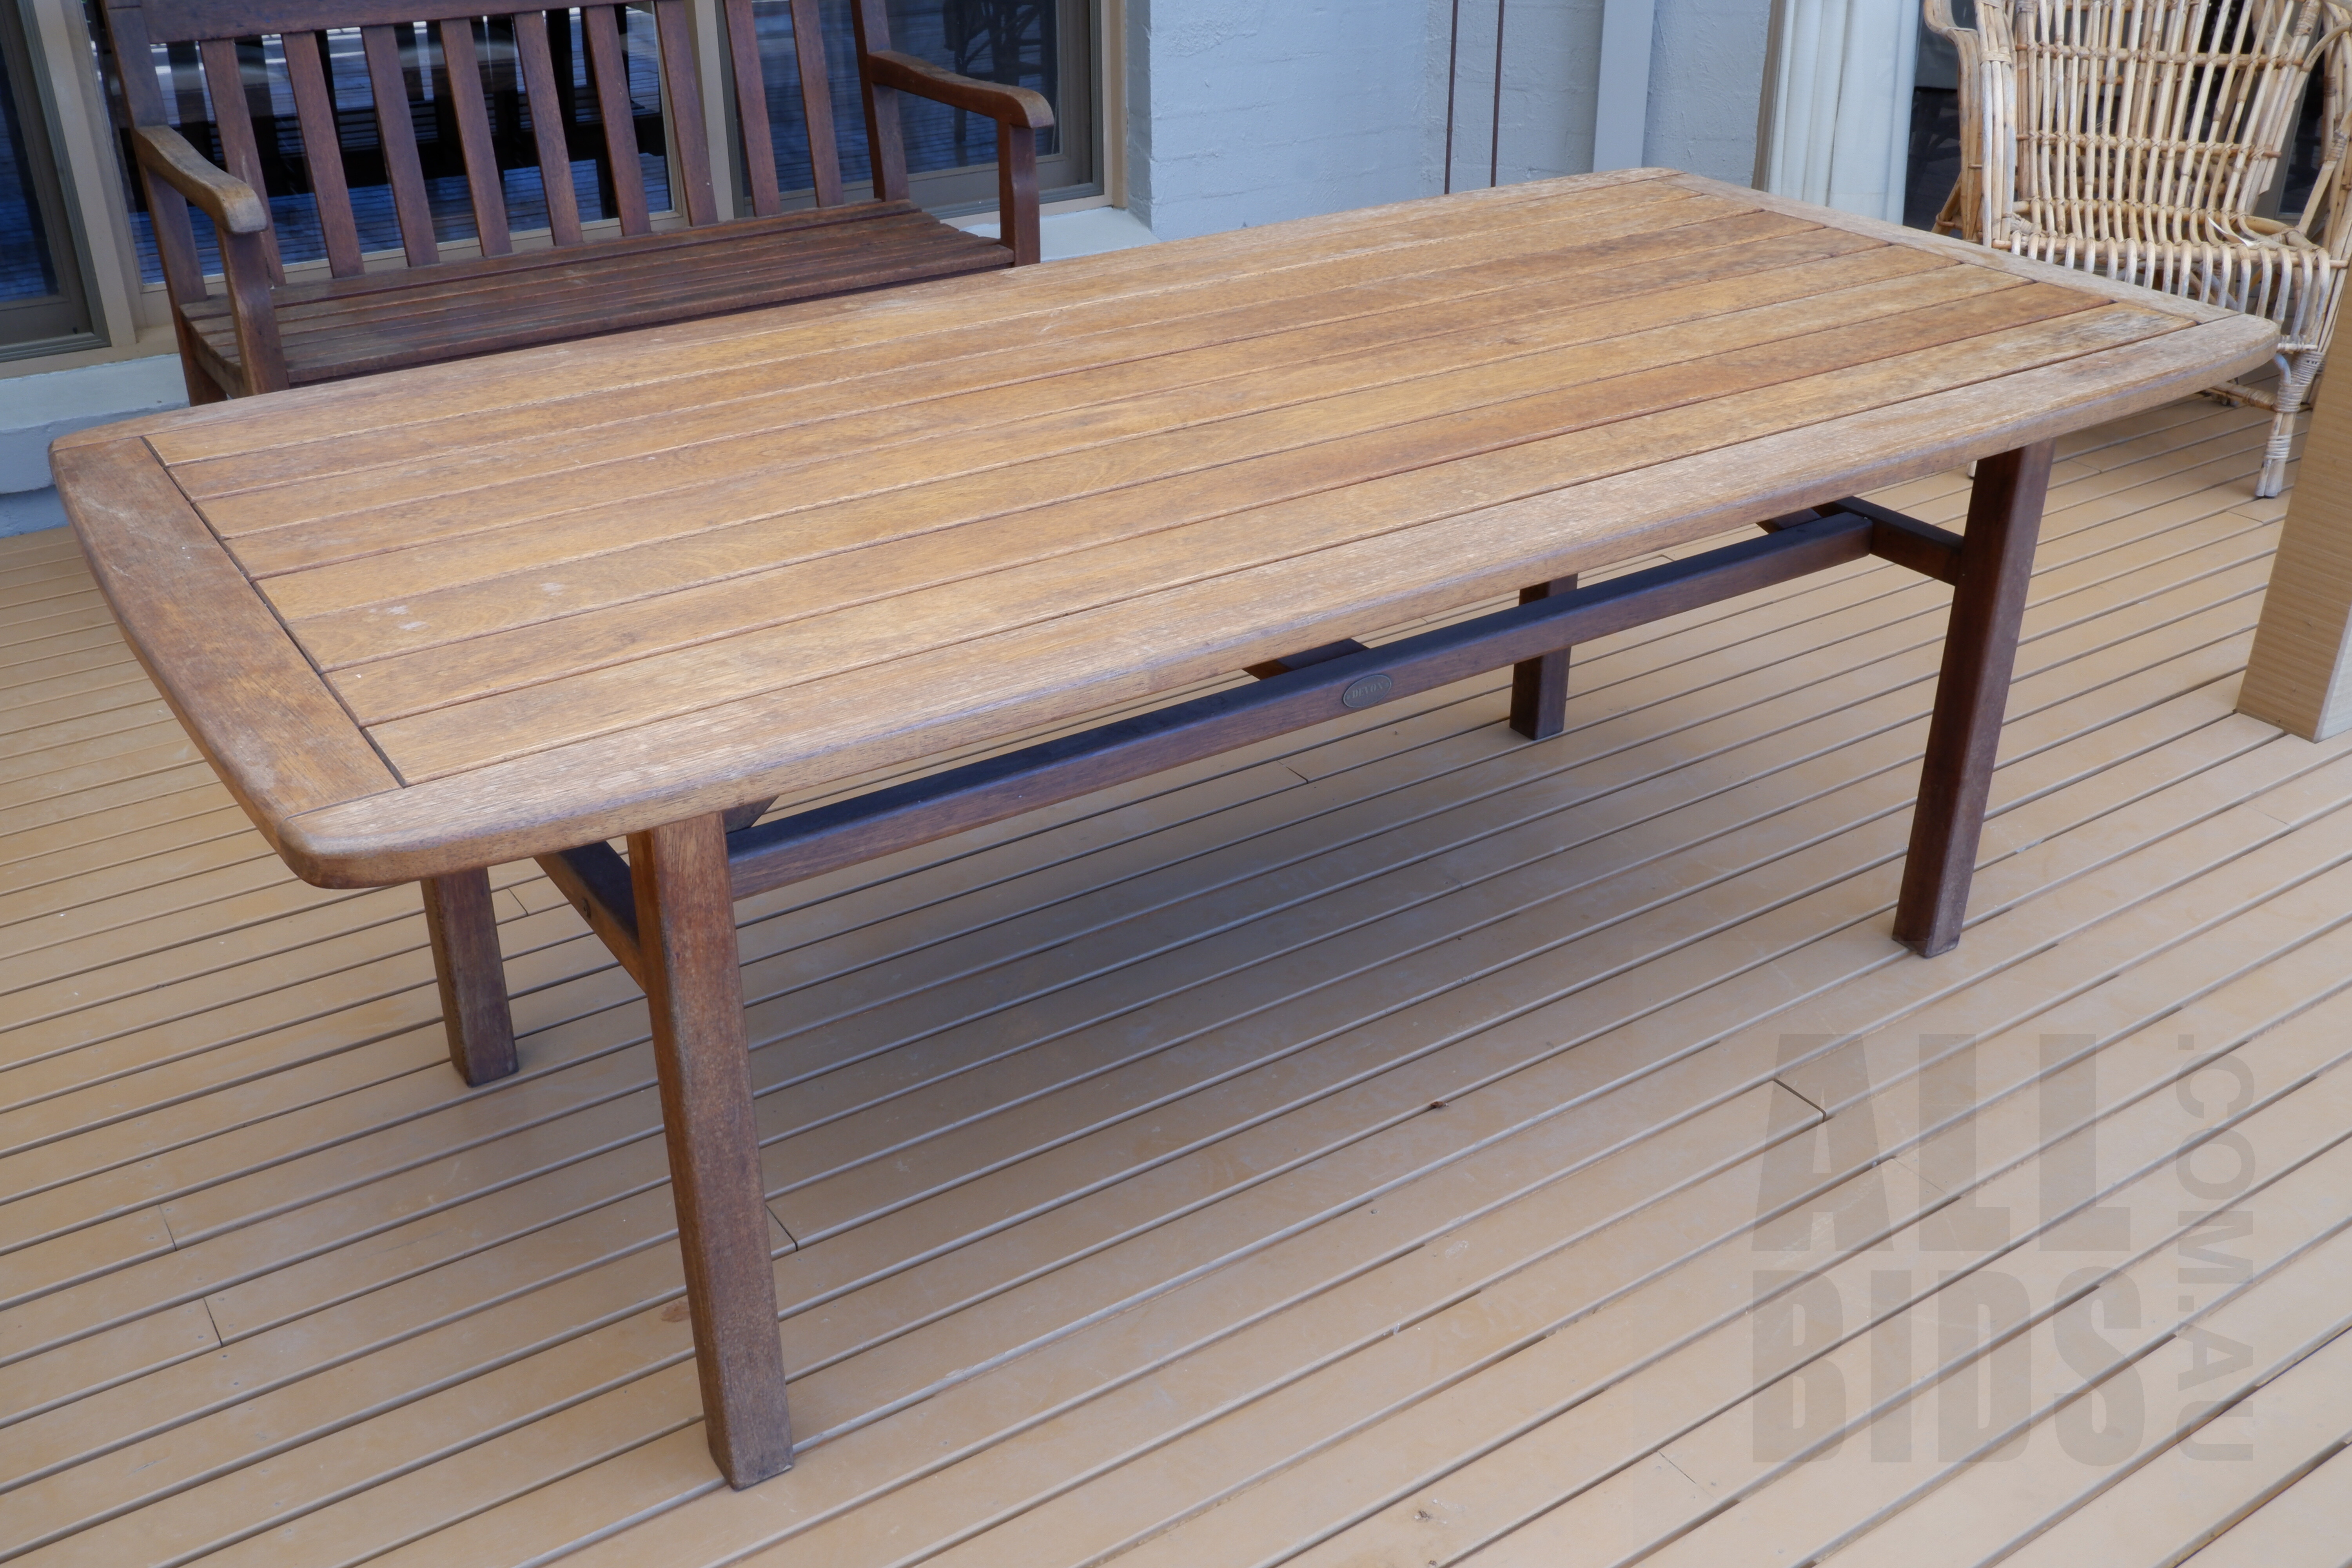 'Solid Australian Hardwood Outdoor Table'